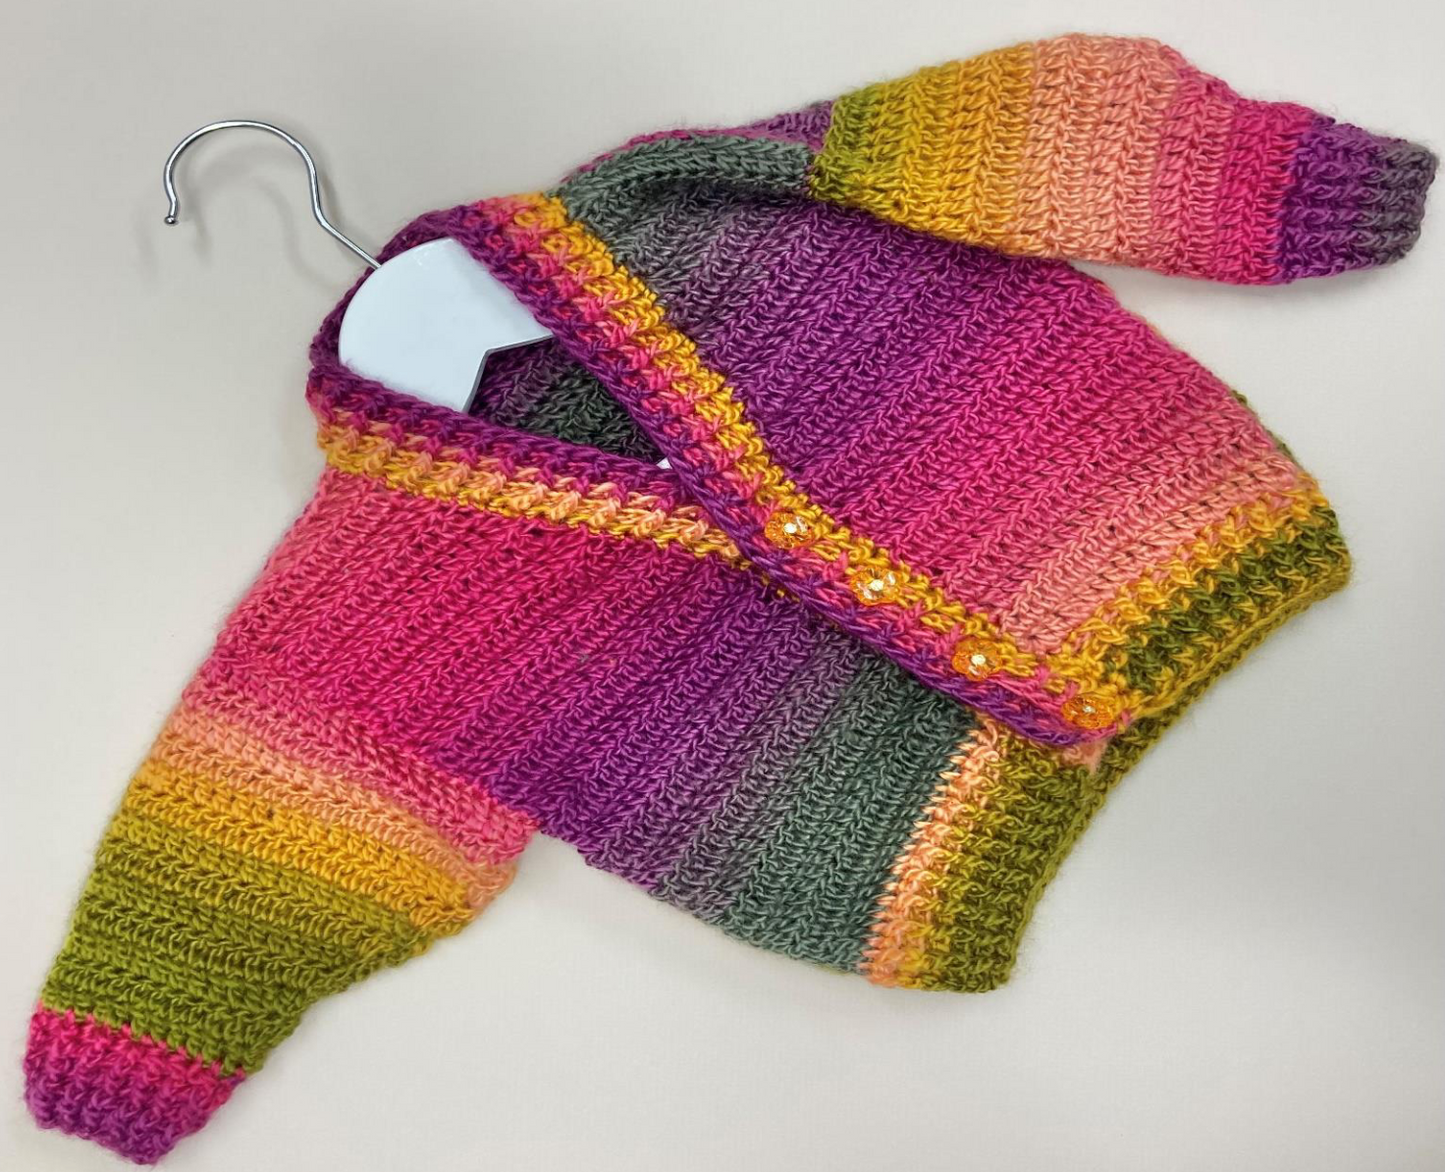 Cygnet Yarns - Boho Baby Cardigan Crochet kit